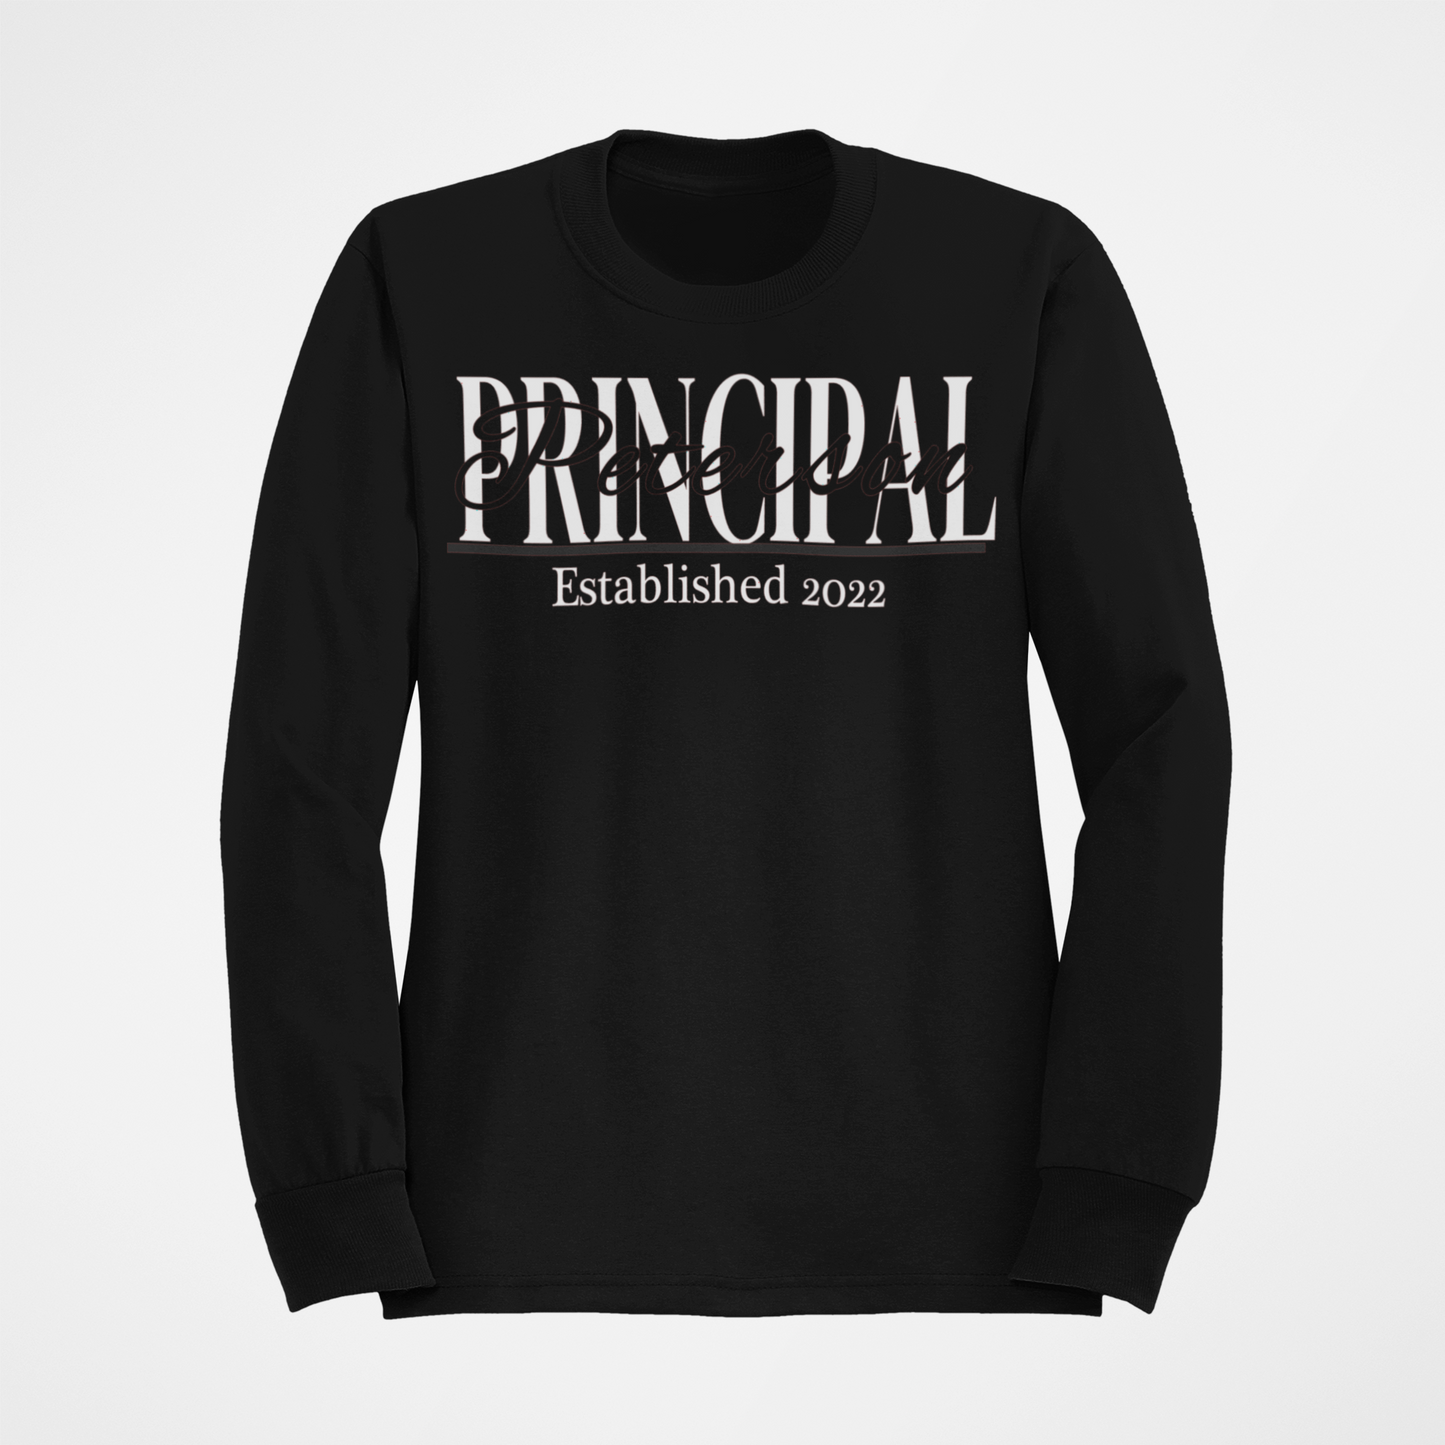 Personalizable Established Principal T-shirt